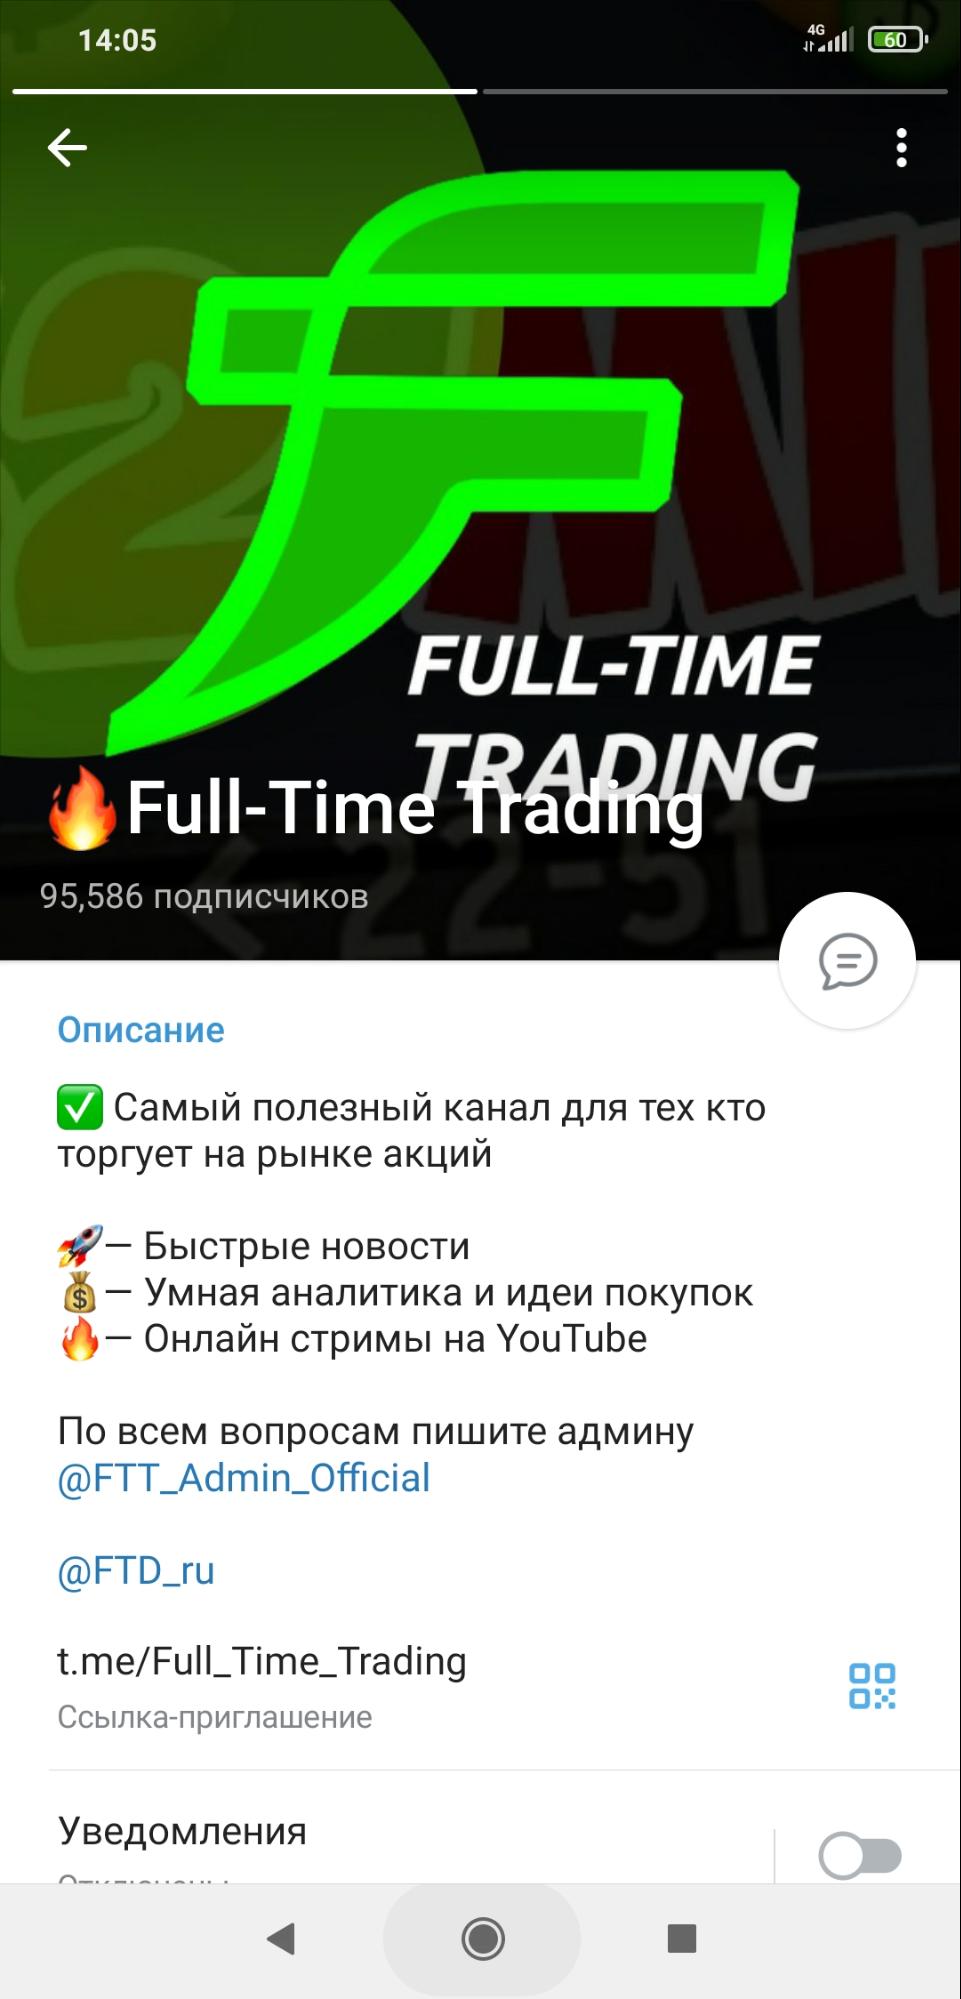 Full-Time trading телеграм